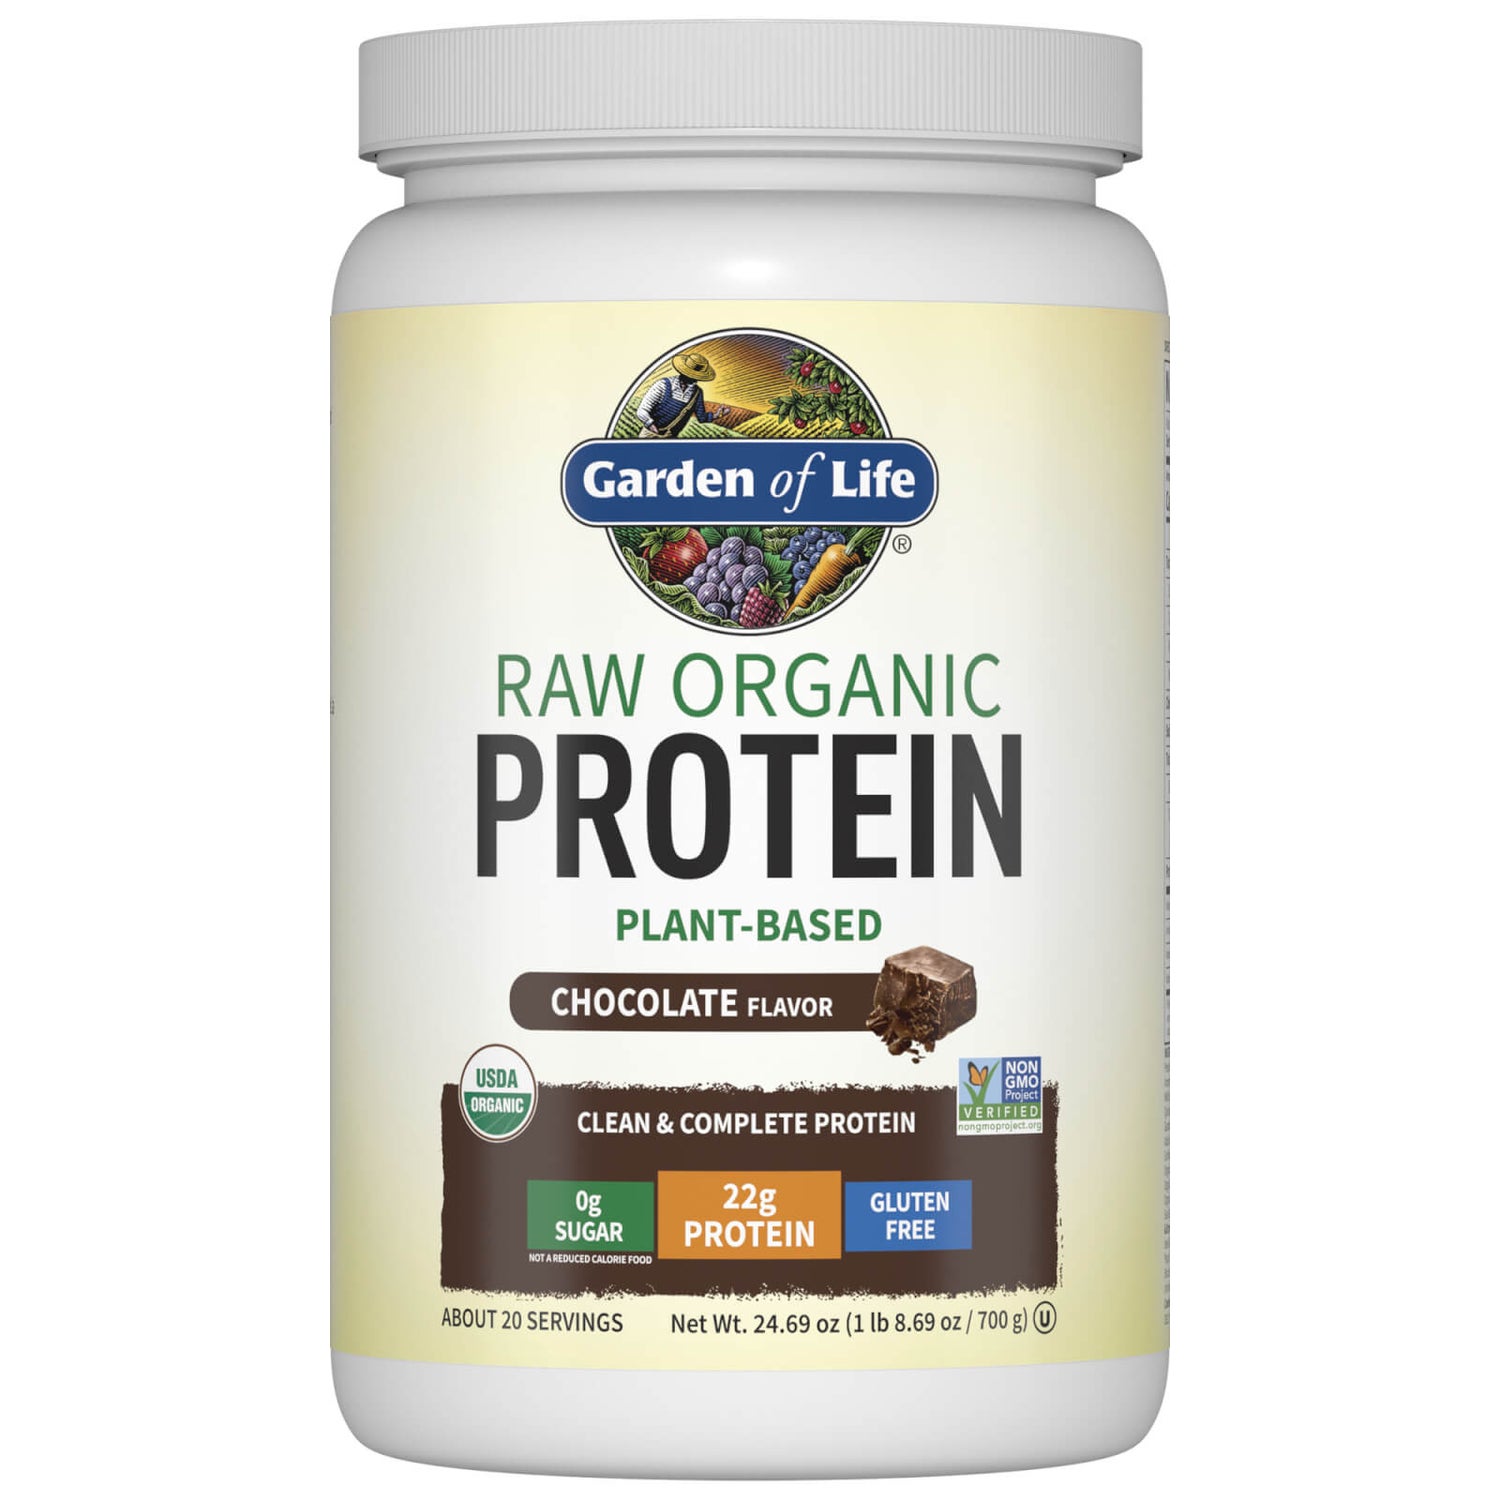 Raw Organic Protein - Chocolate - 660g